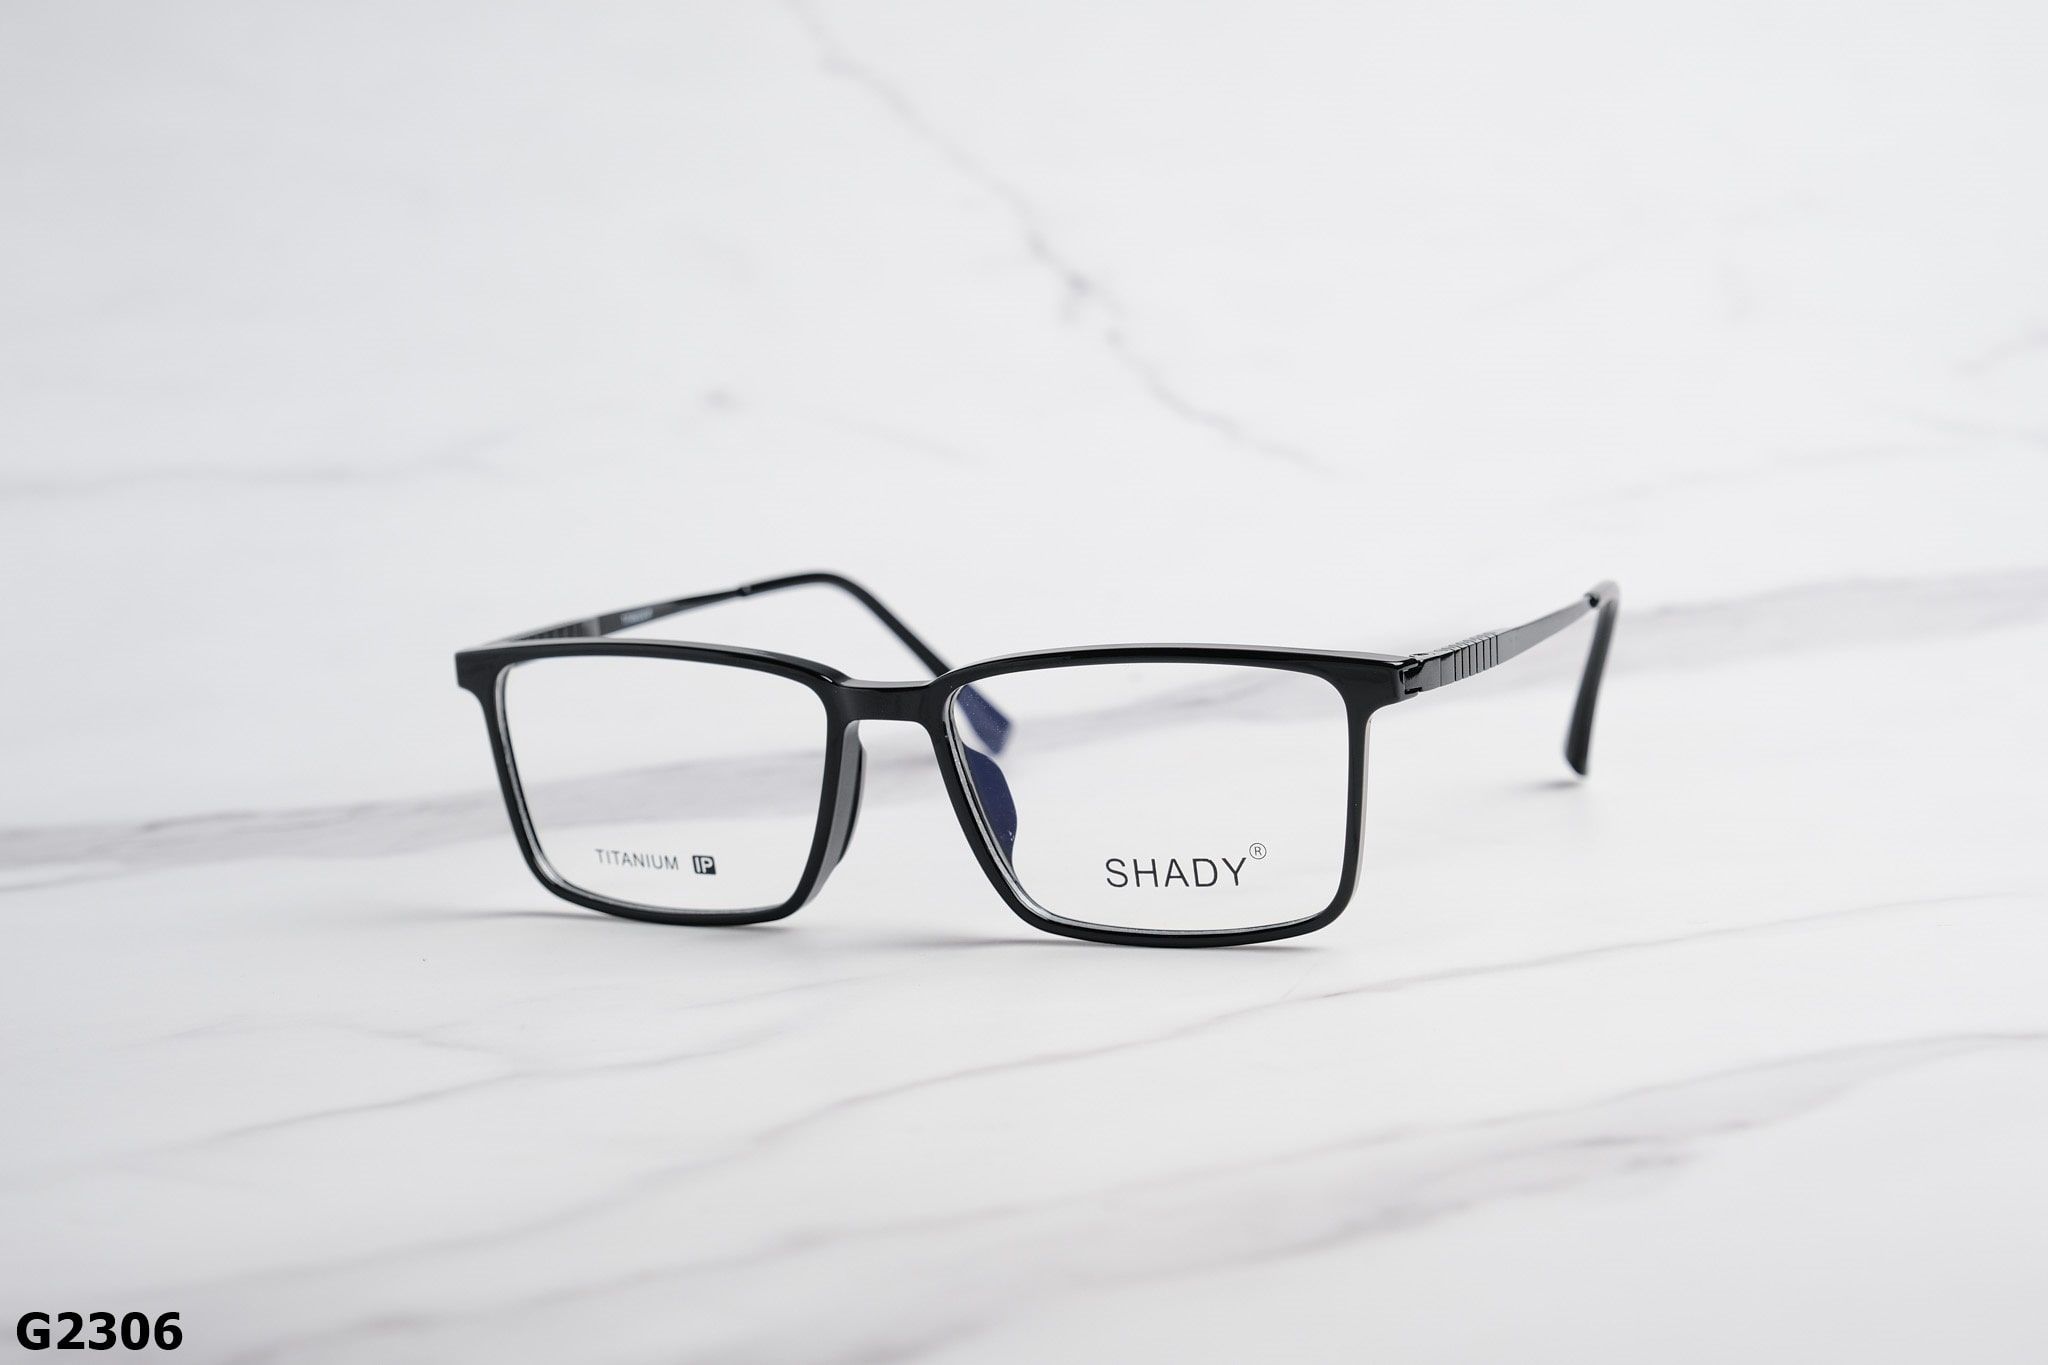  SHADY Eyewear - Glasses - G2306 